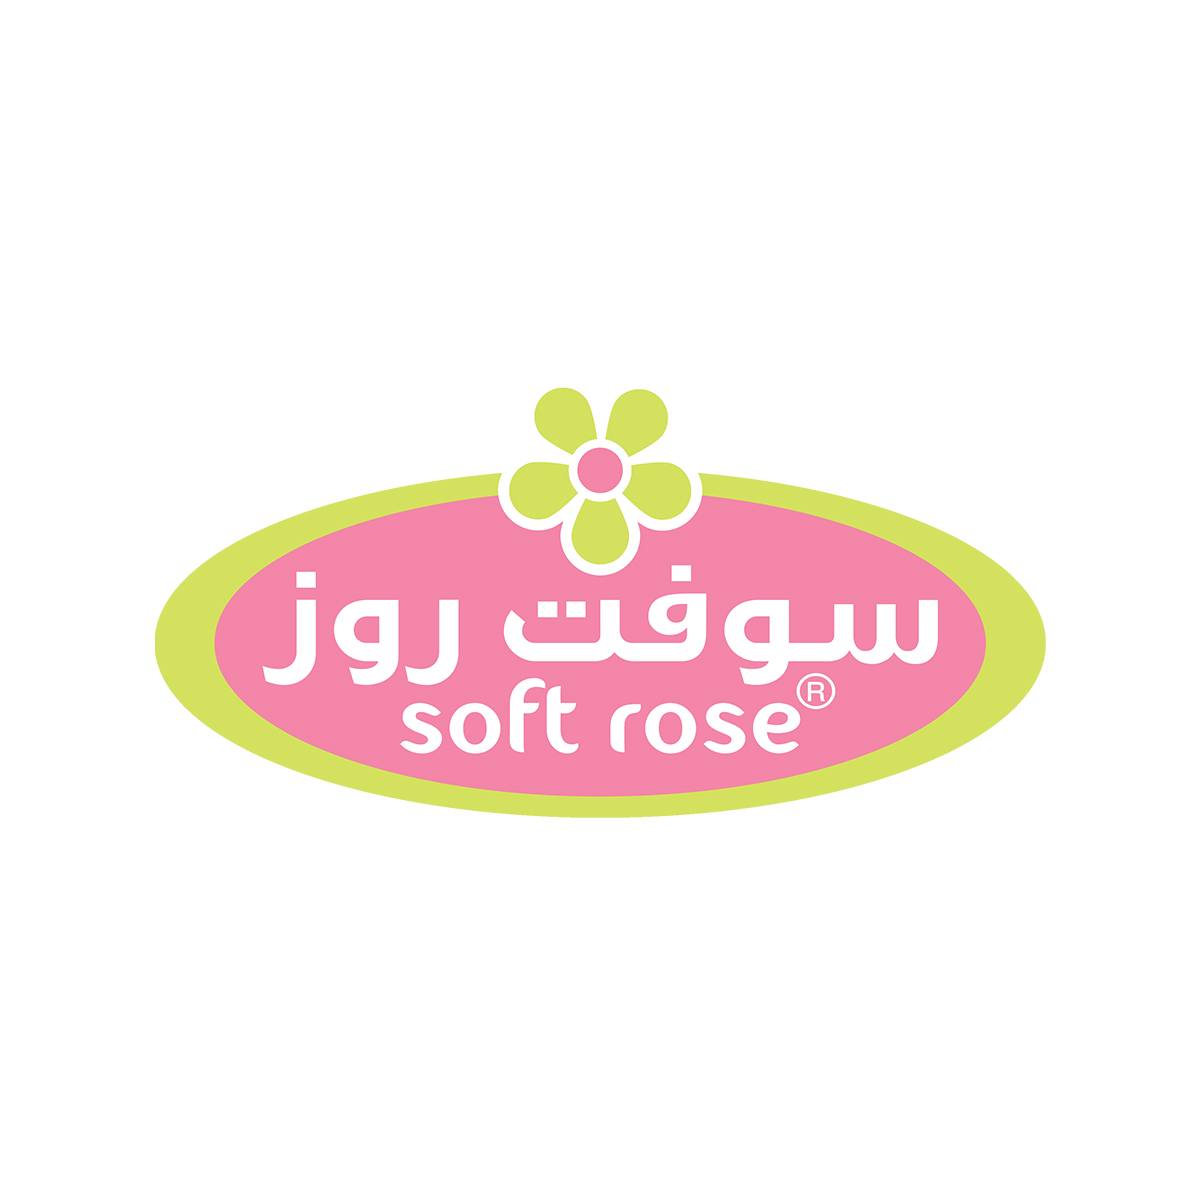 Soft Rose International company